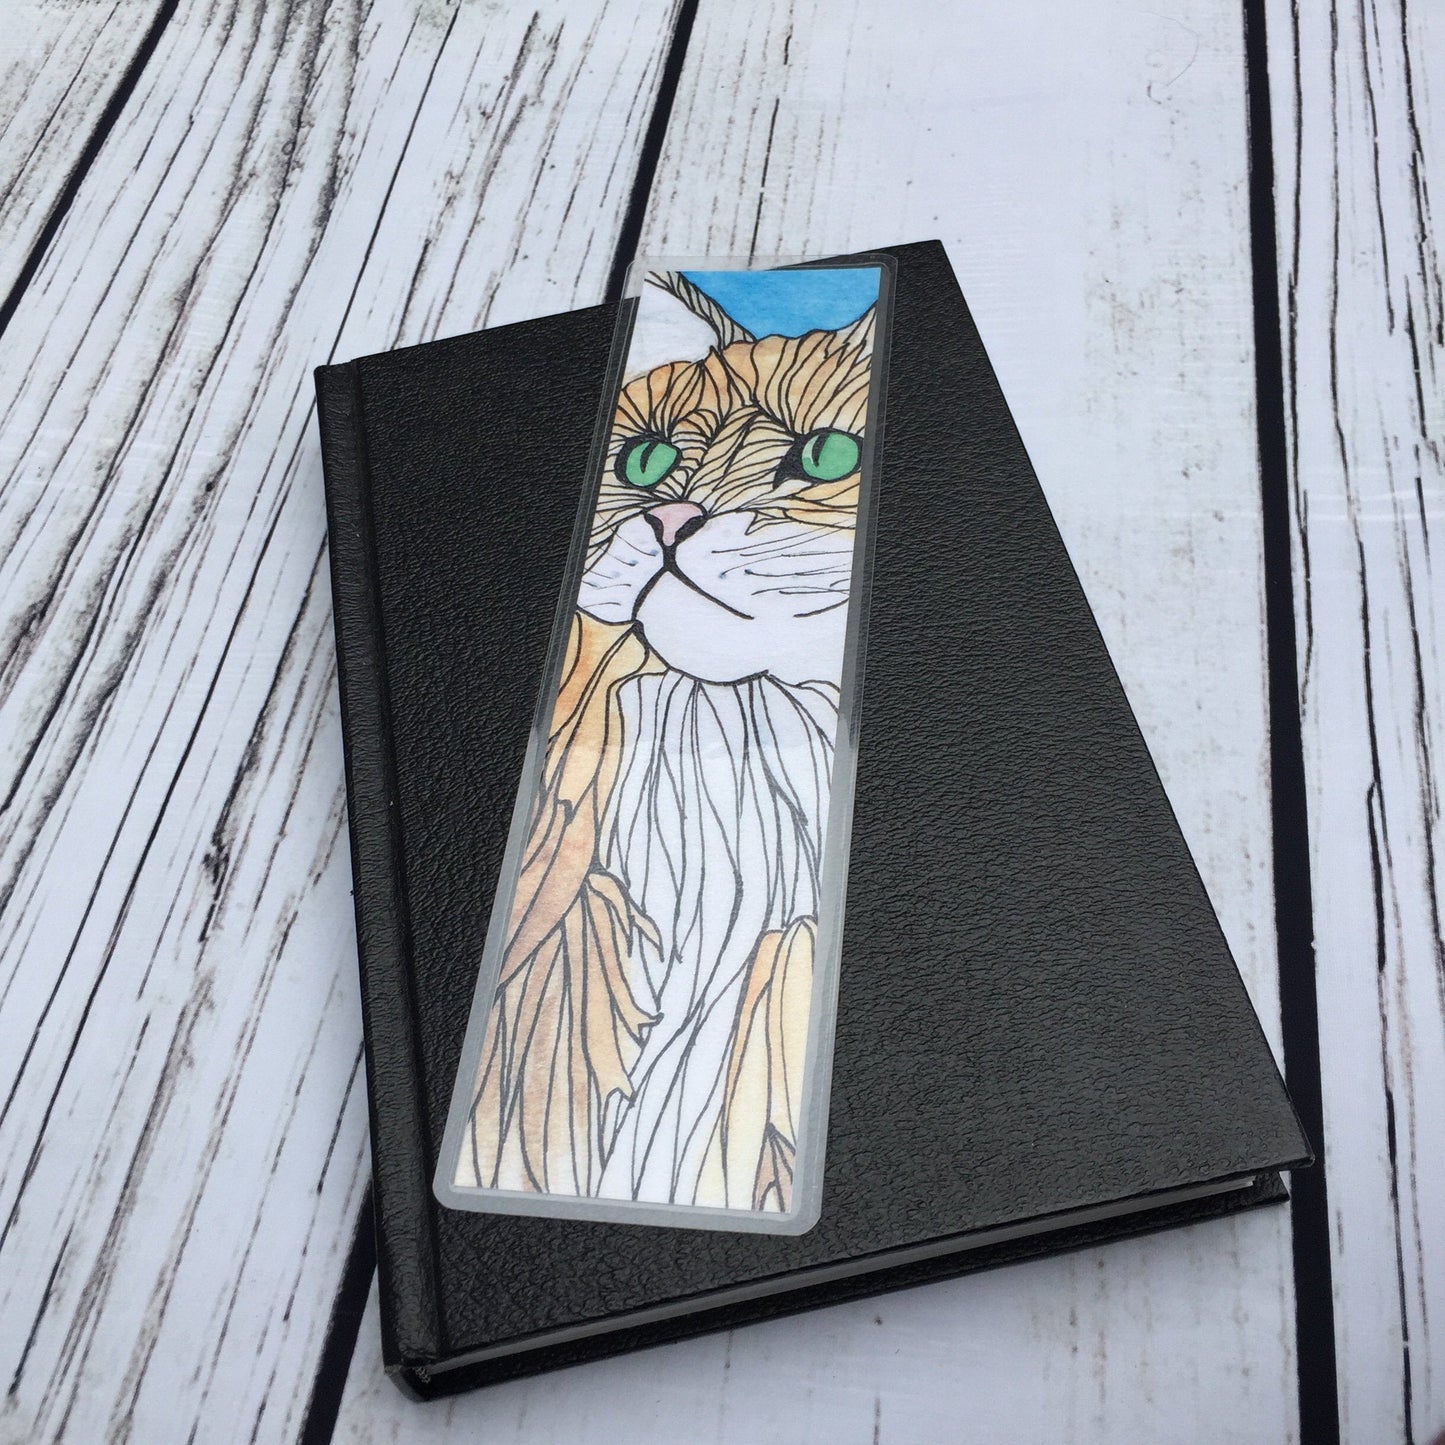 PinkPolish Design Bookmarks "Green Eyed Cat" 2-Sided Bookmark